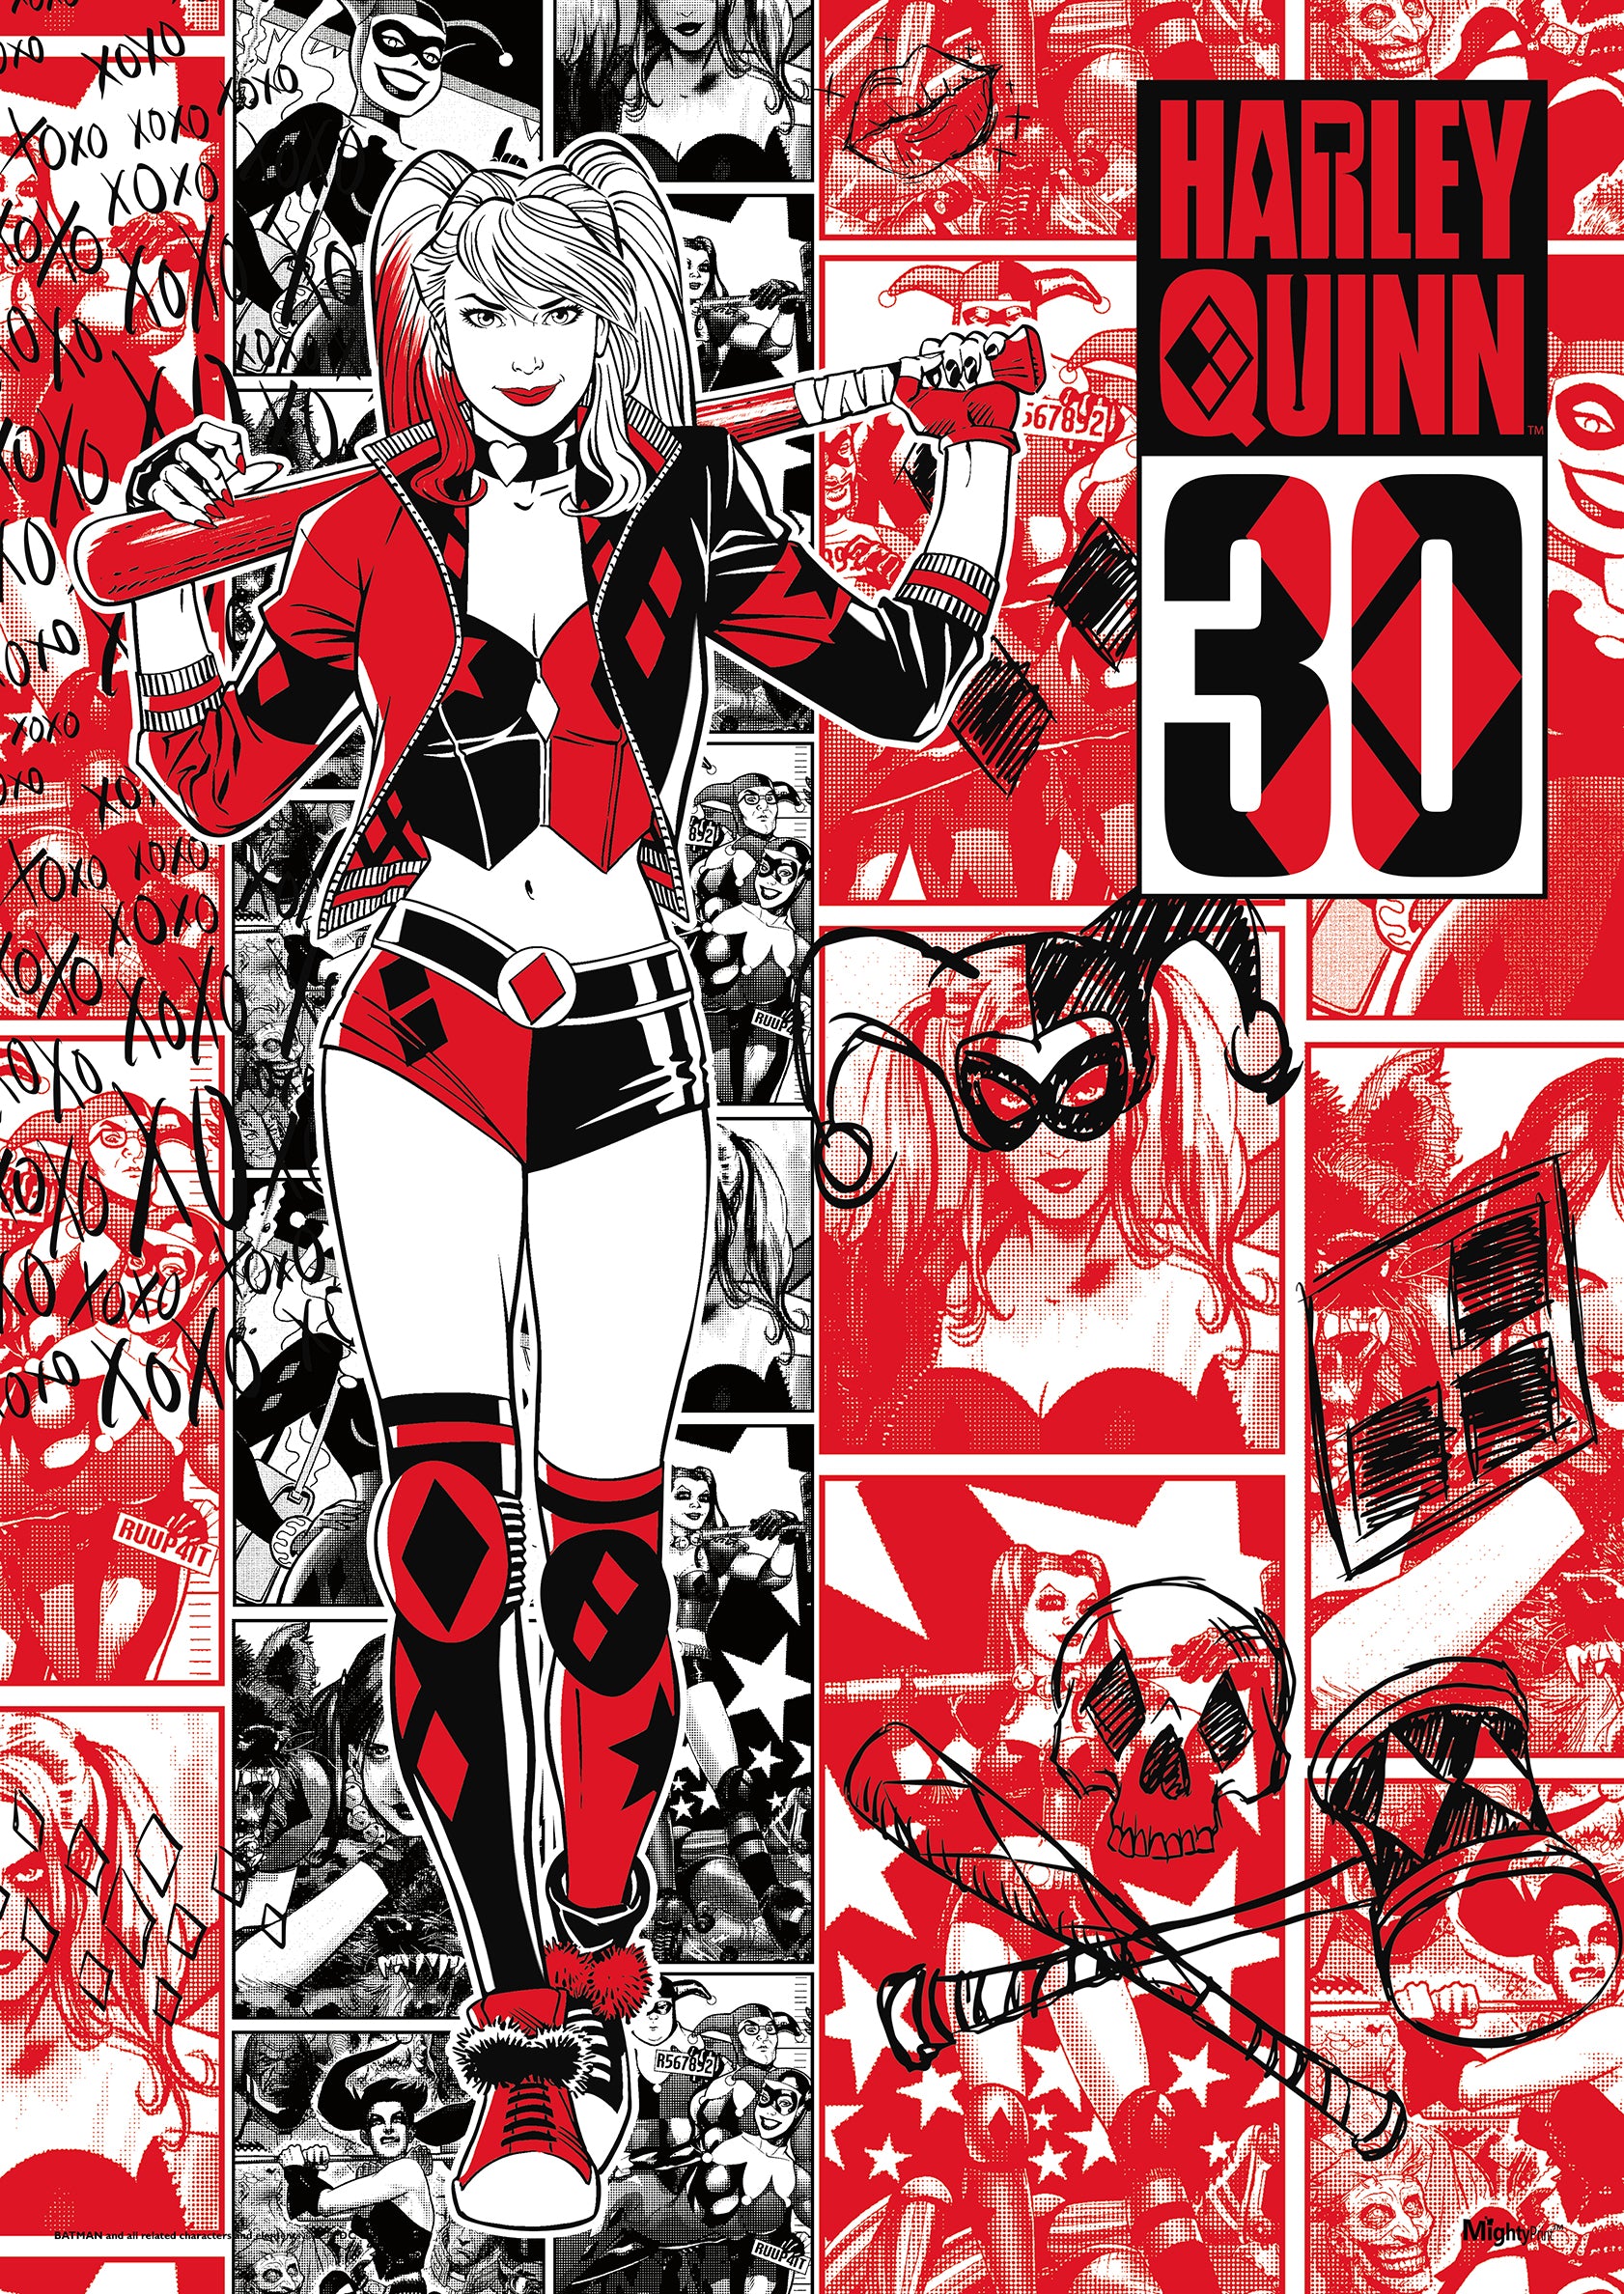 DC Comics (Harley Quinn - 30th Anniversary) MightyPrint™ Wall Art MP17240765